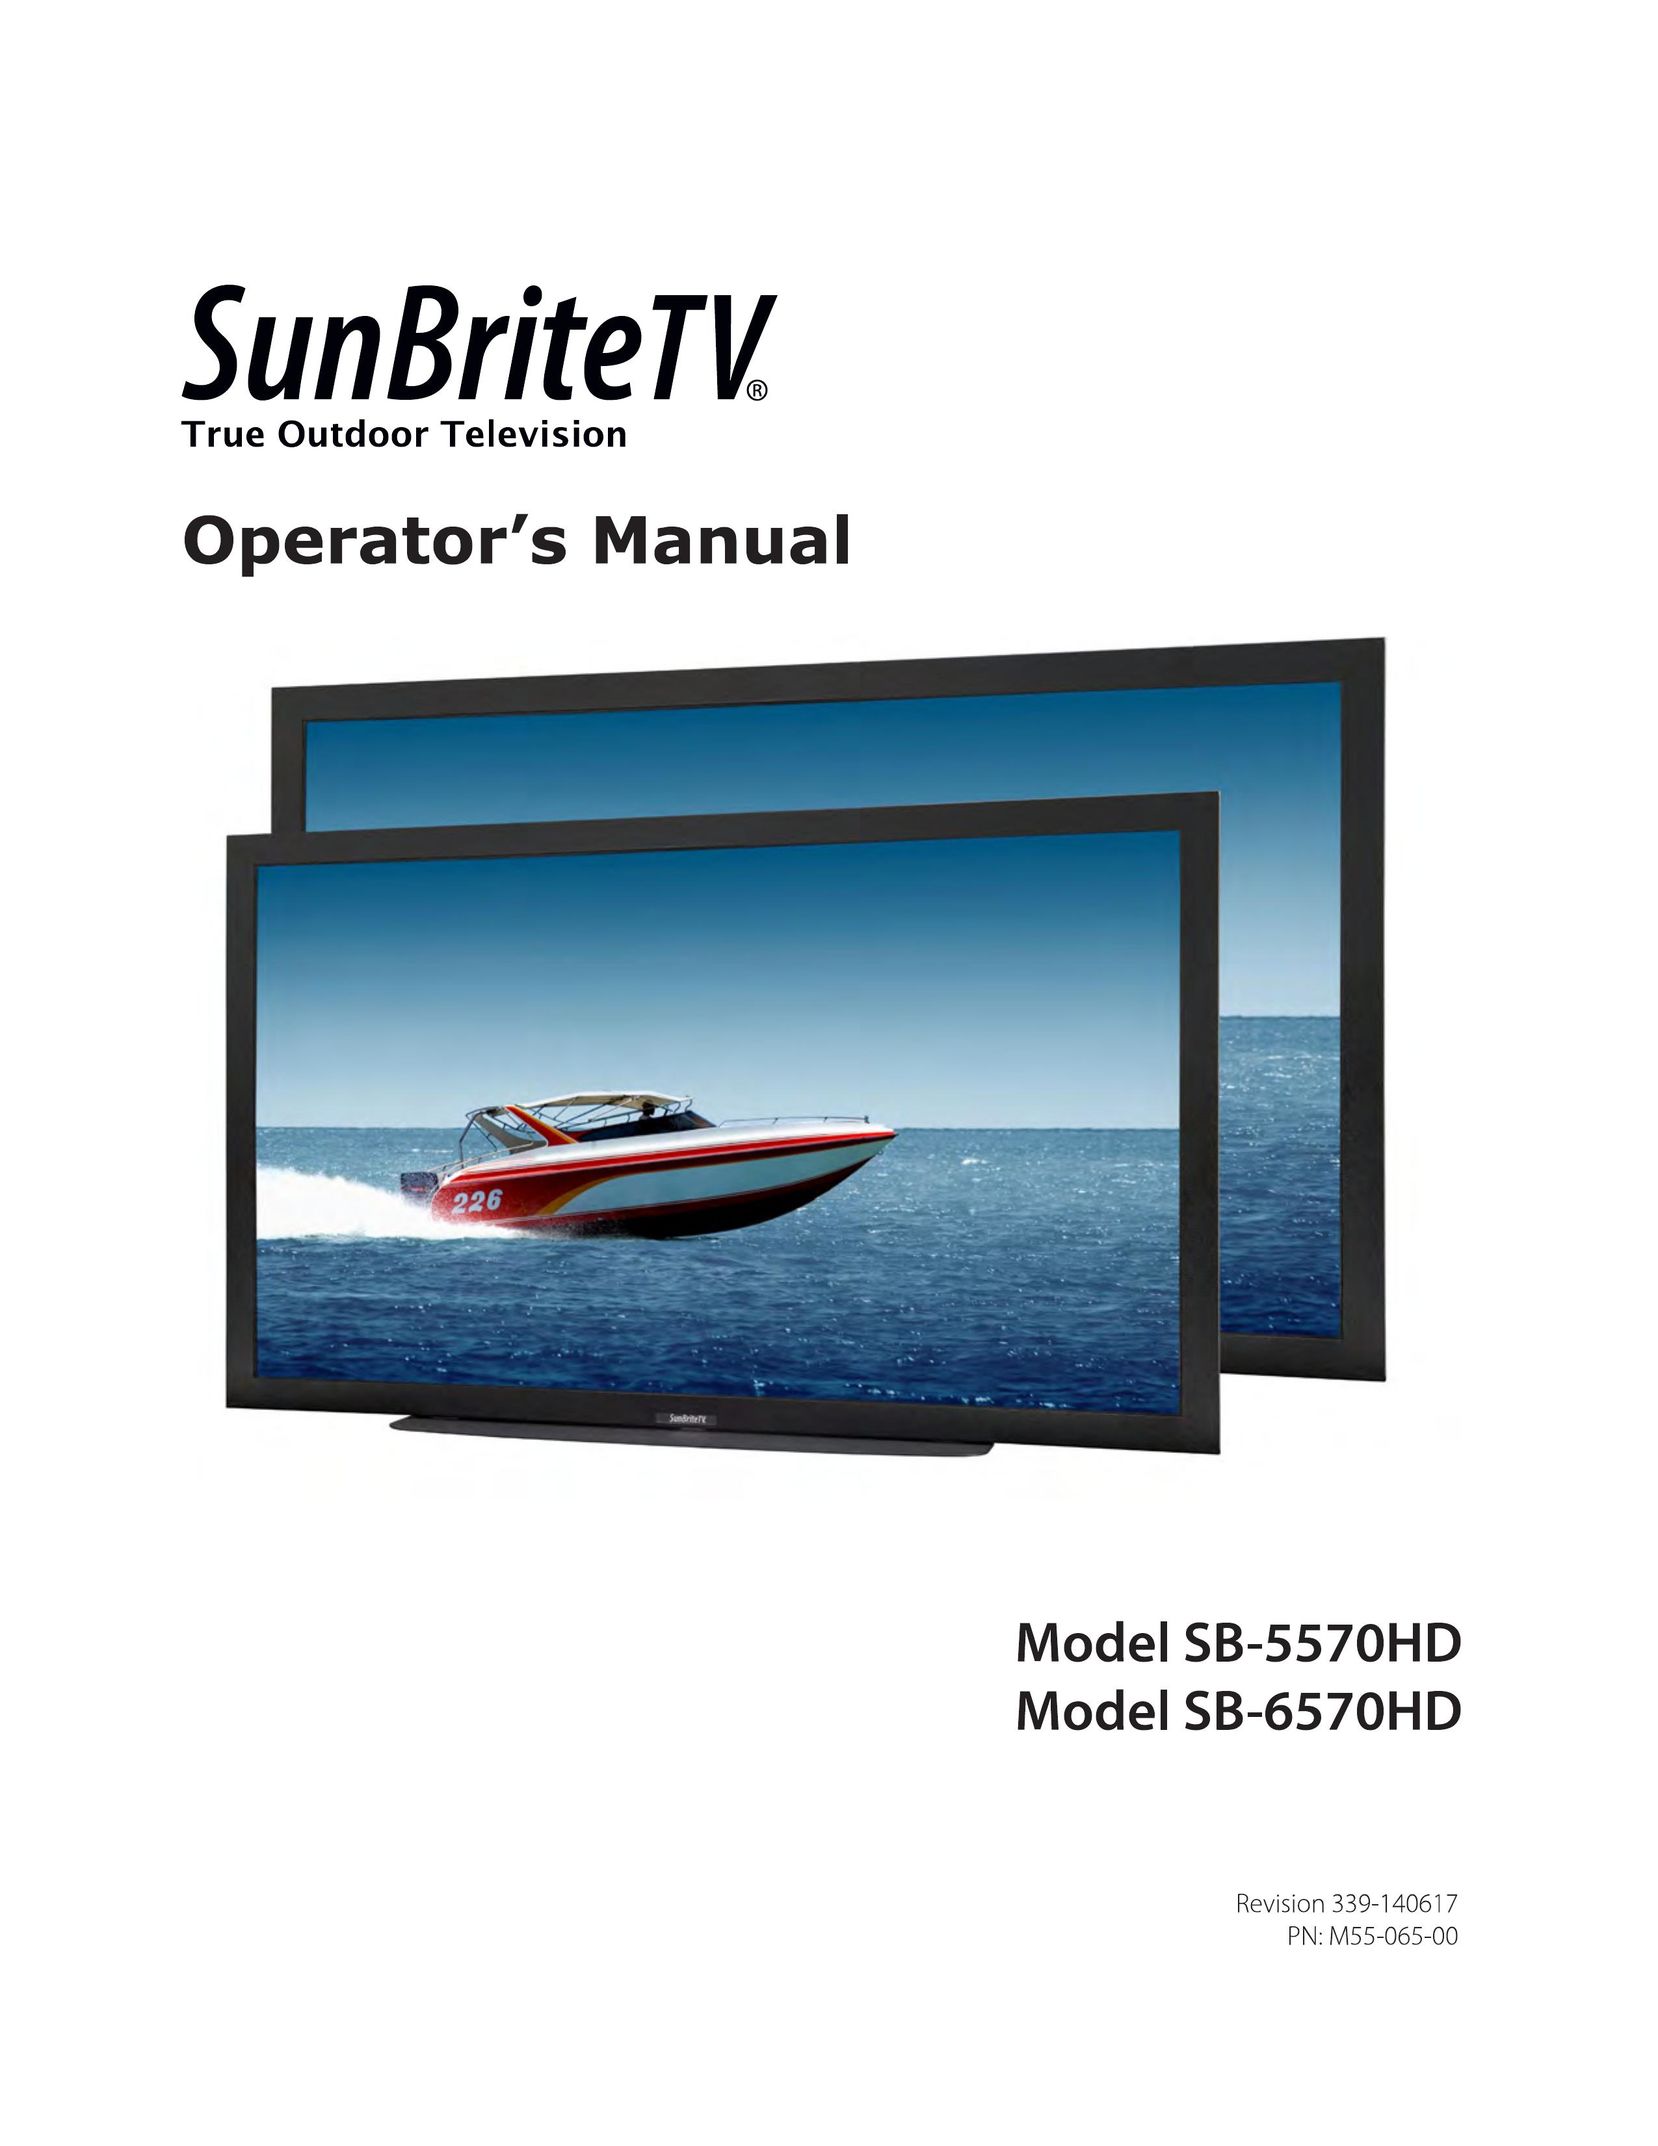 SunBriteTV SB-5570HD Car Satellite TV System User Manual